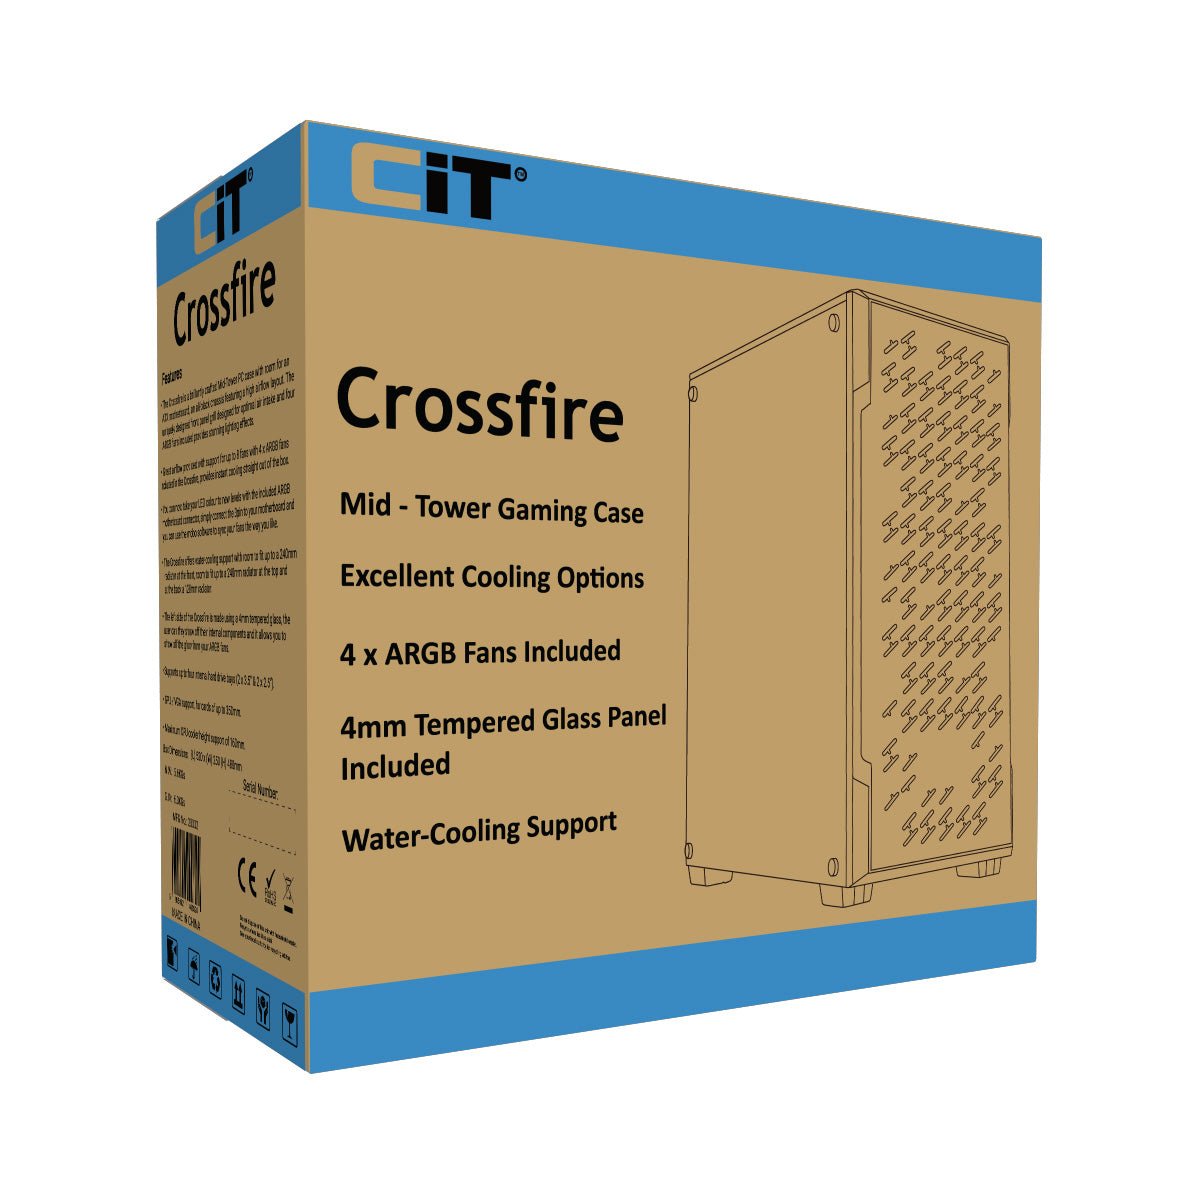 BCC Crossfire i3 Gaming PC nVidia GT710 Computer 240GB SSD 500GB HDD 8GB RAM WiFi